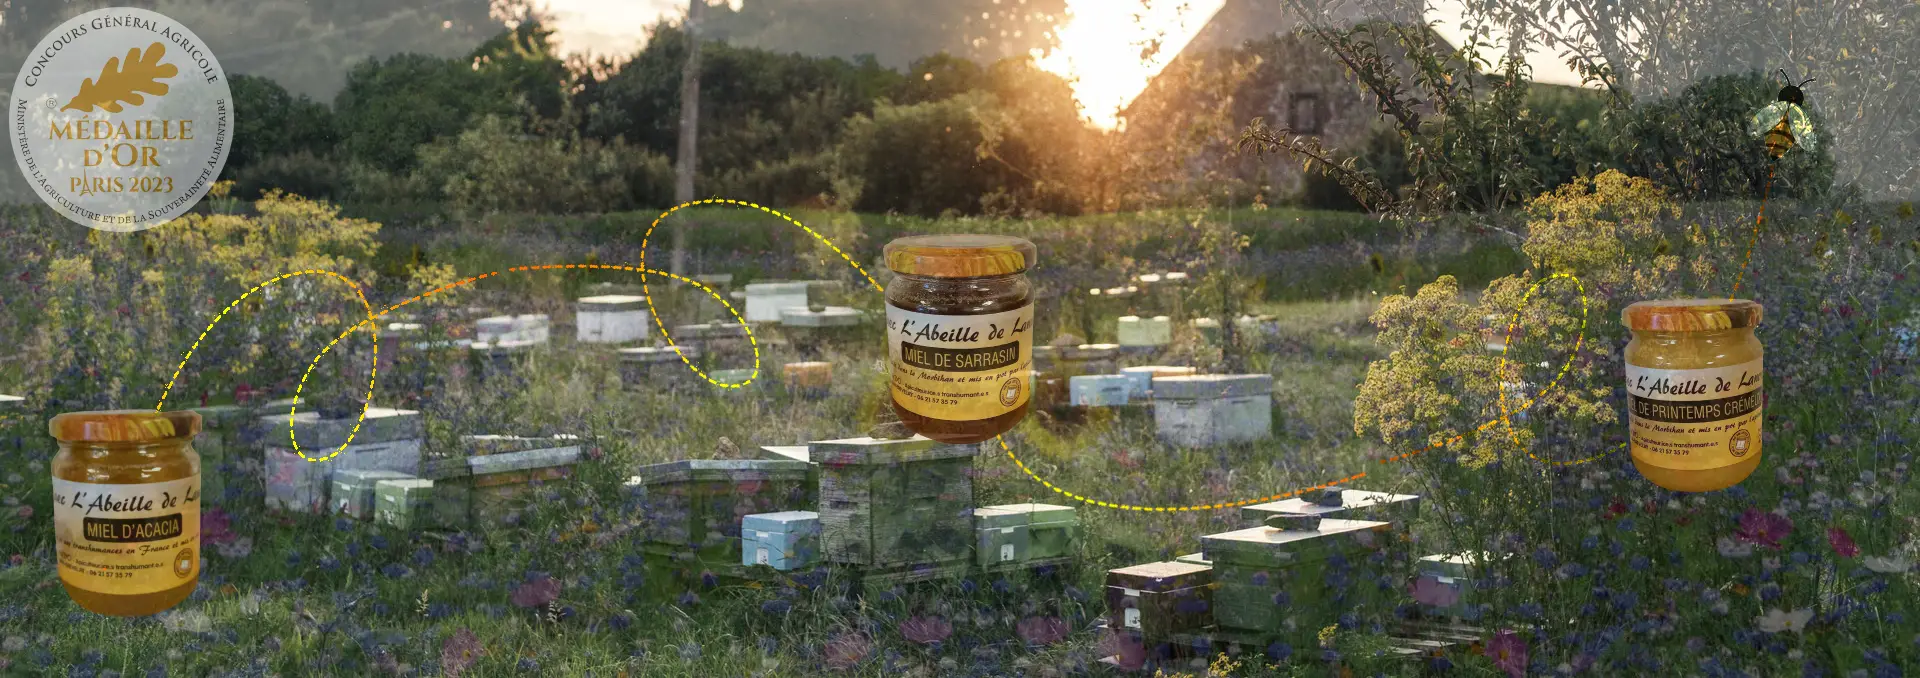 Produits de la ruche